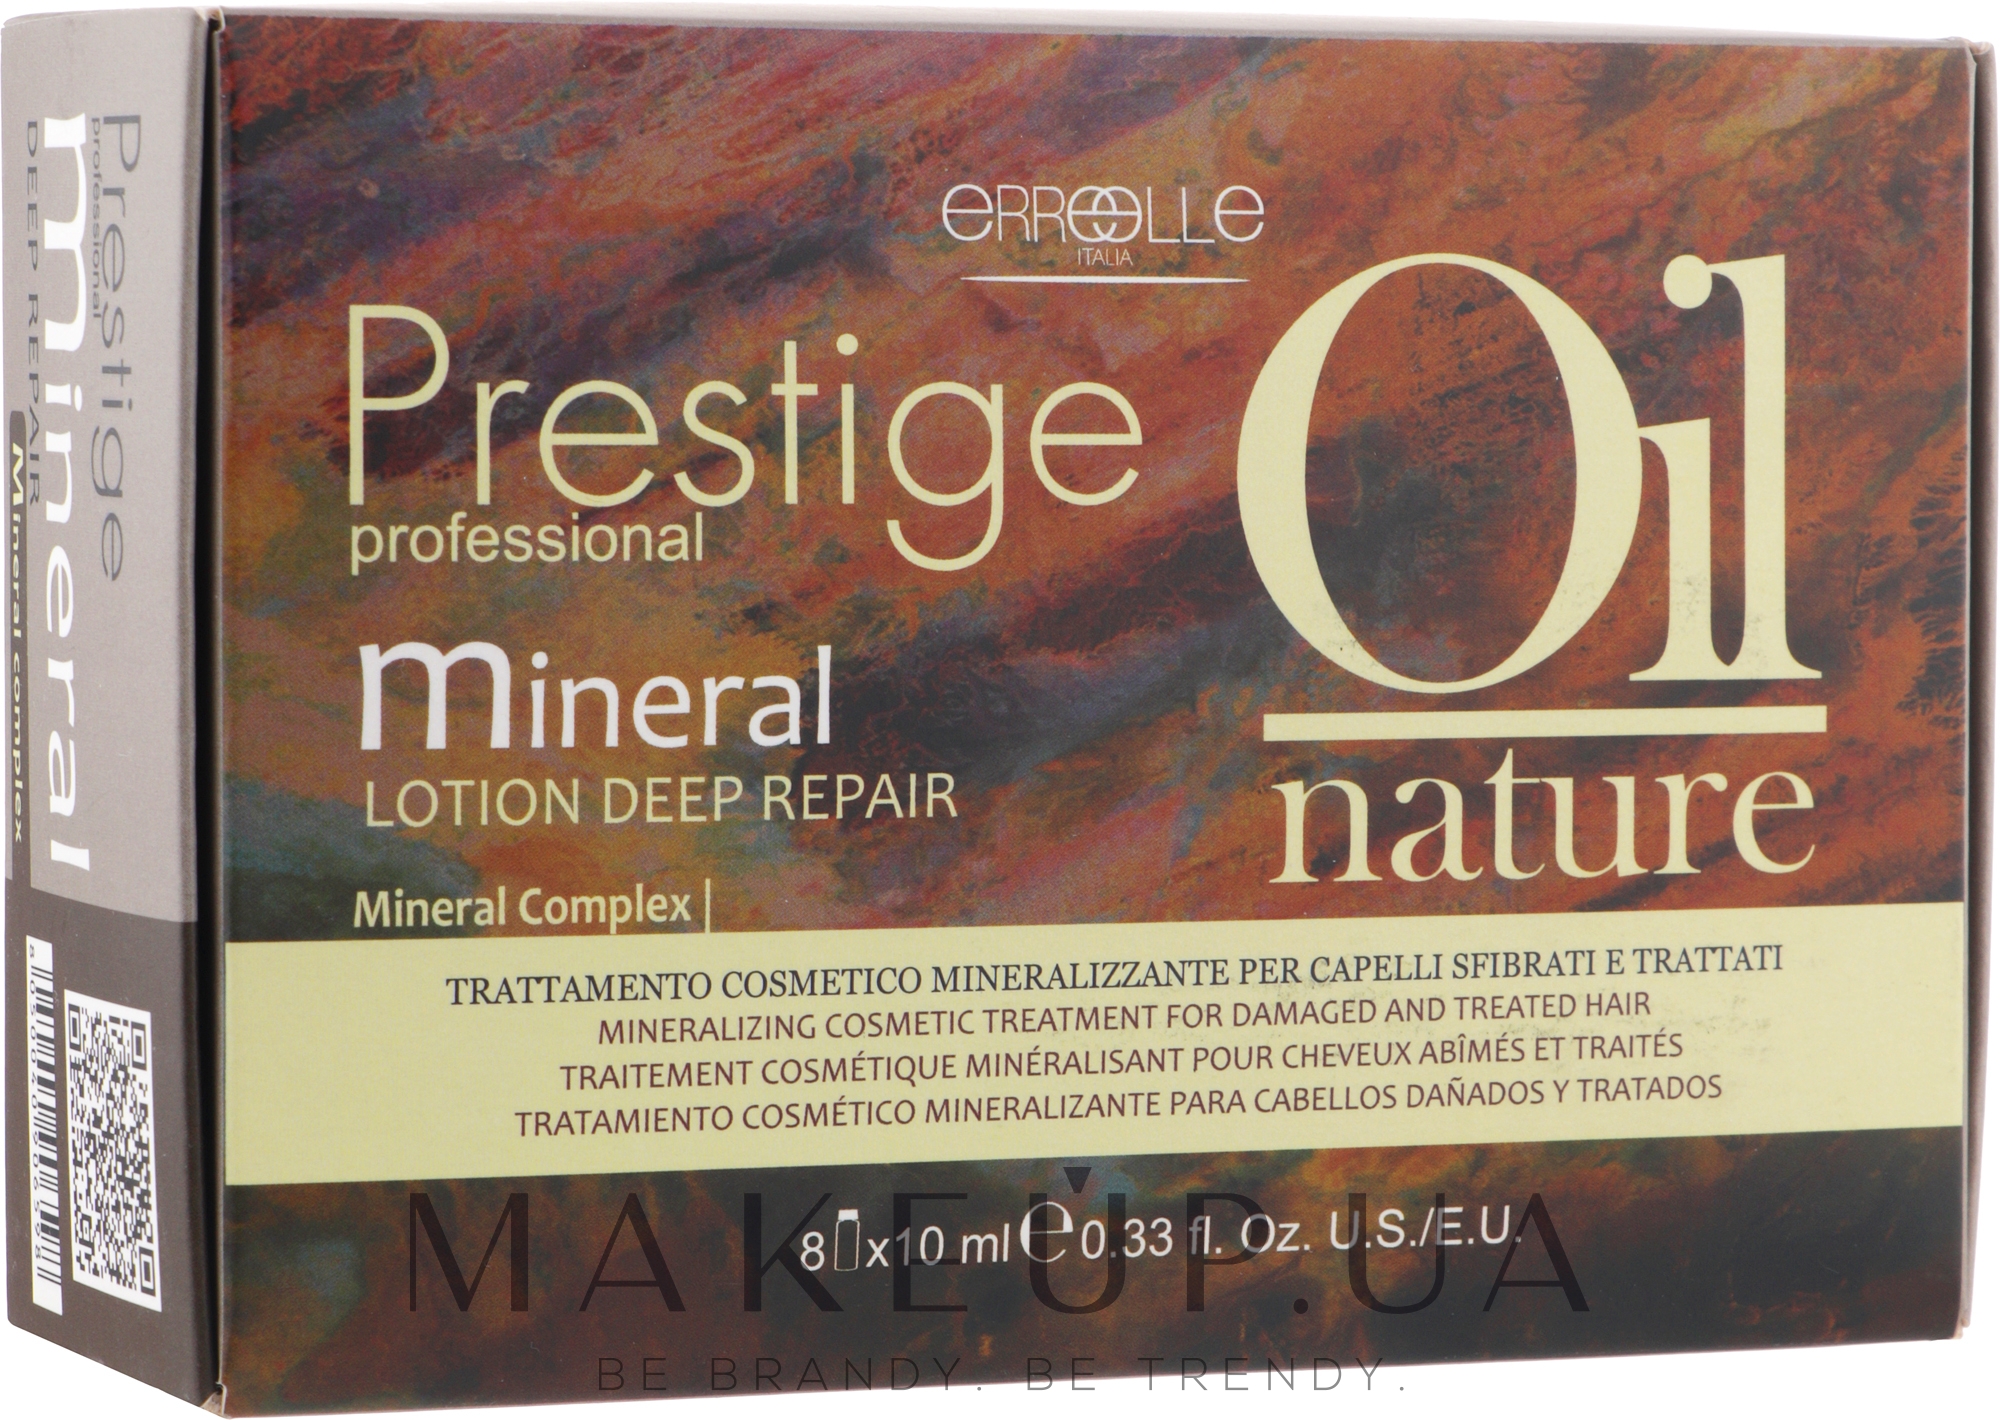 Ампулы для лечения поврежденных волос - Erreelle Italia Prestige Oil Nature Mineral — фото 8x10ml